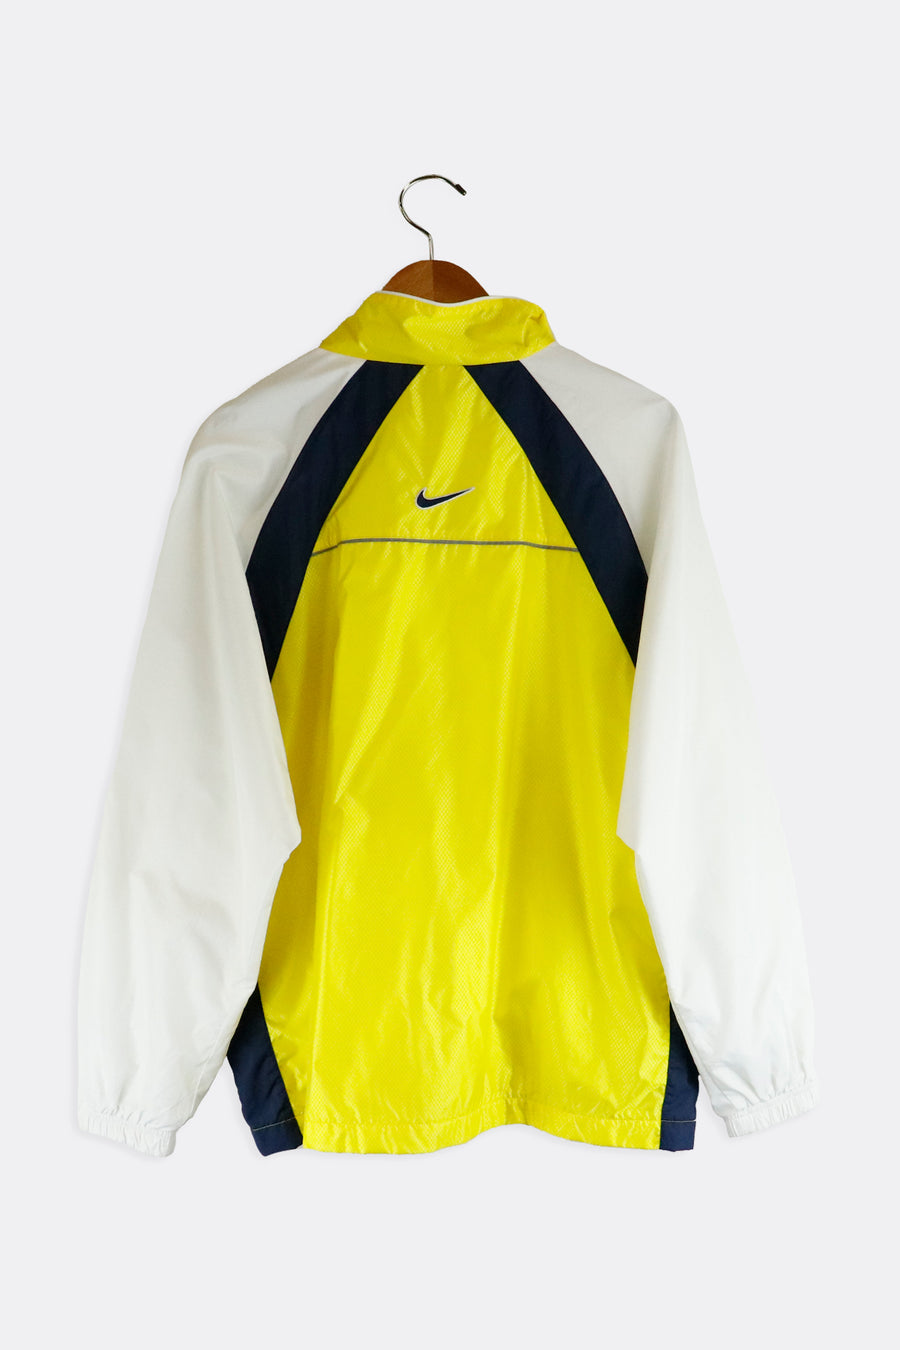 Vintage Nike Multi Colored Zip Up Windbreaker Jacket Sz L